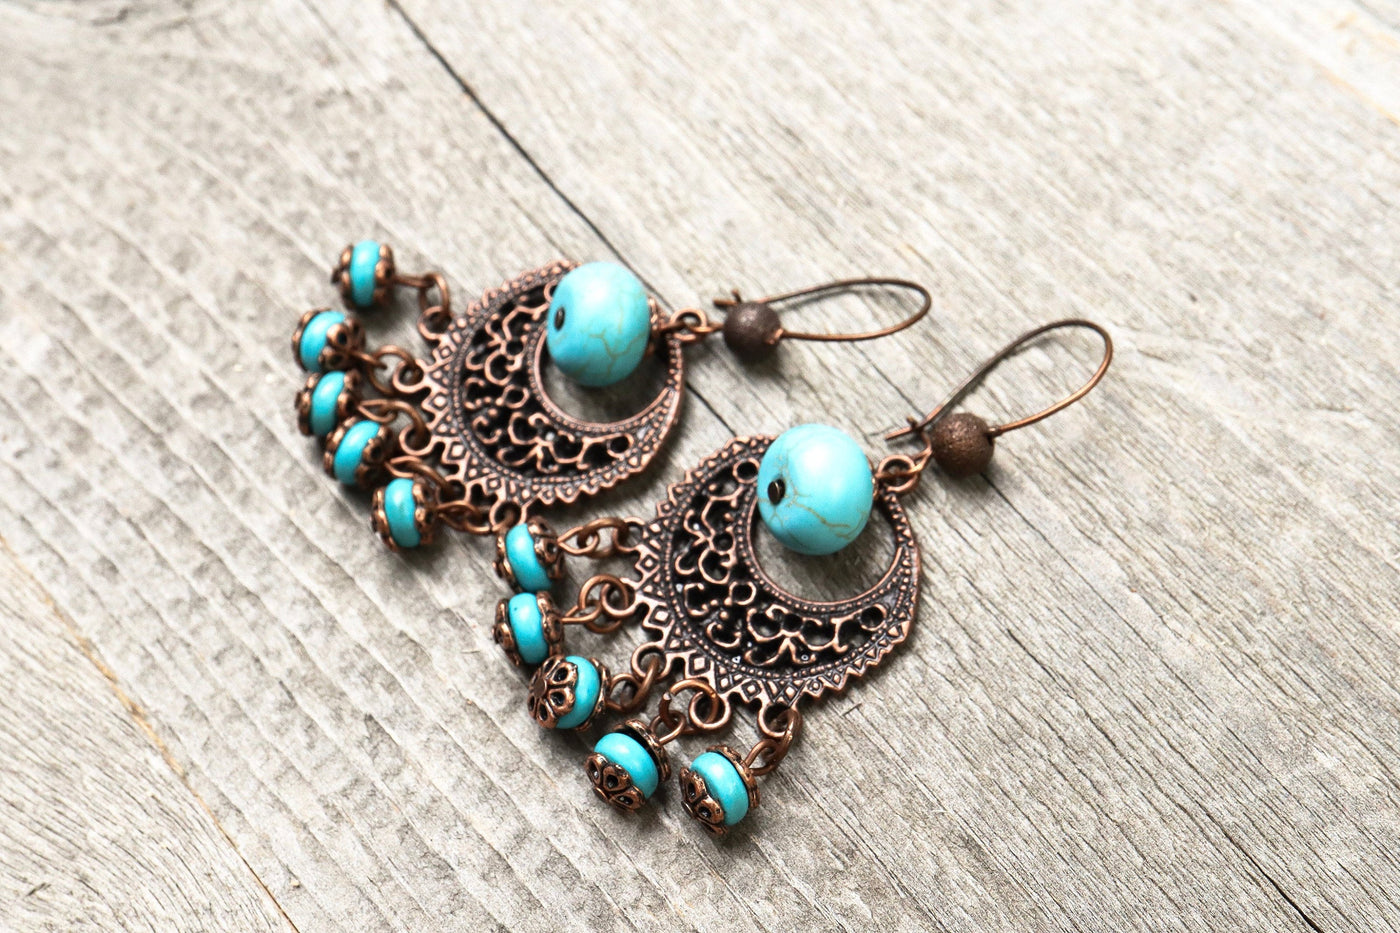 Boho Filigree Blue Stone Earrings - Turquoise Earthy Metal Dangle Antique Gypsy Vintage Hippie Statement Bohemian Rustic Handmade Jewelry